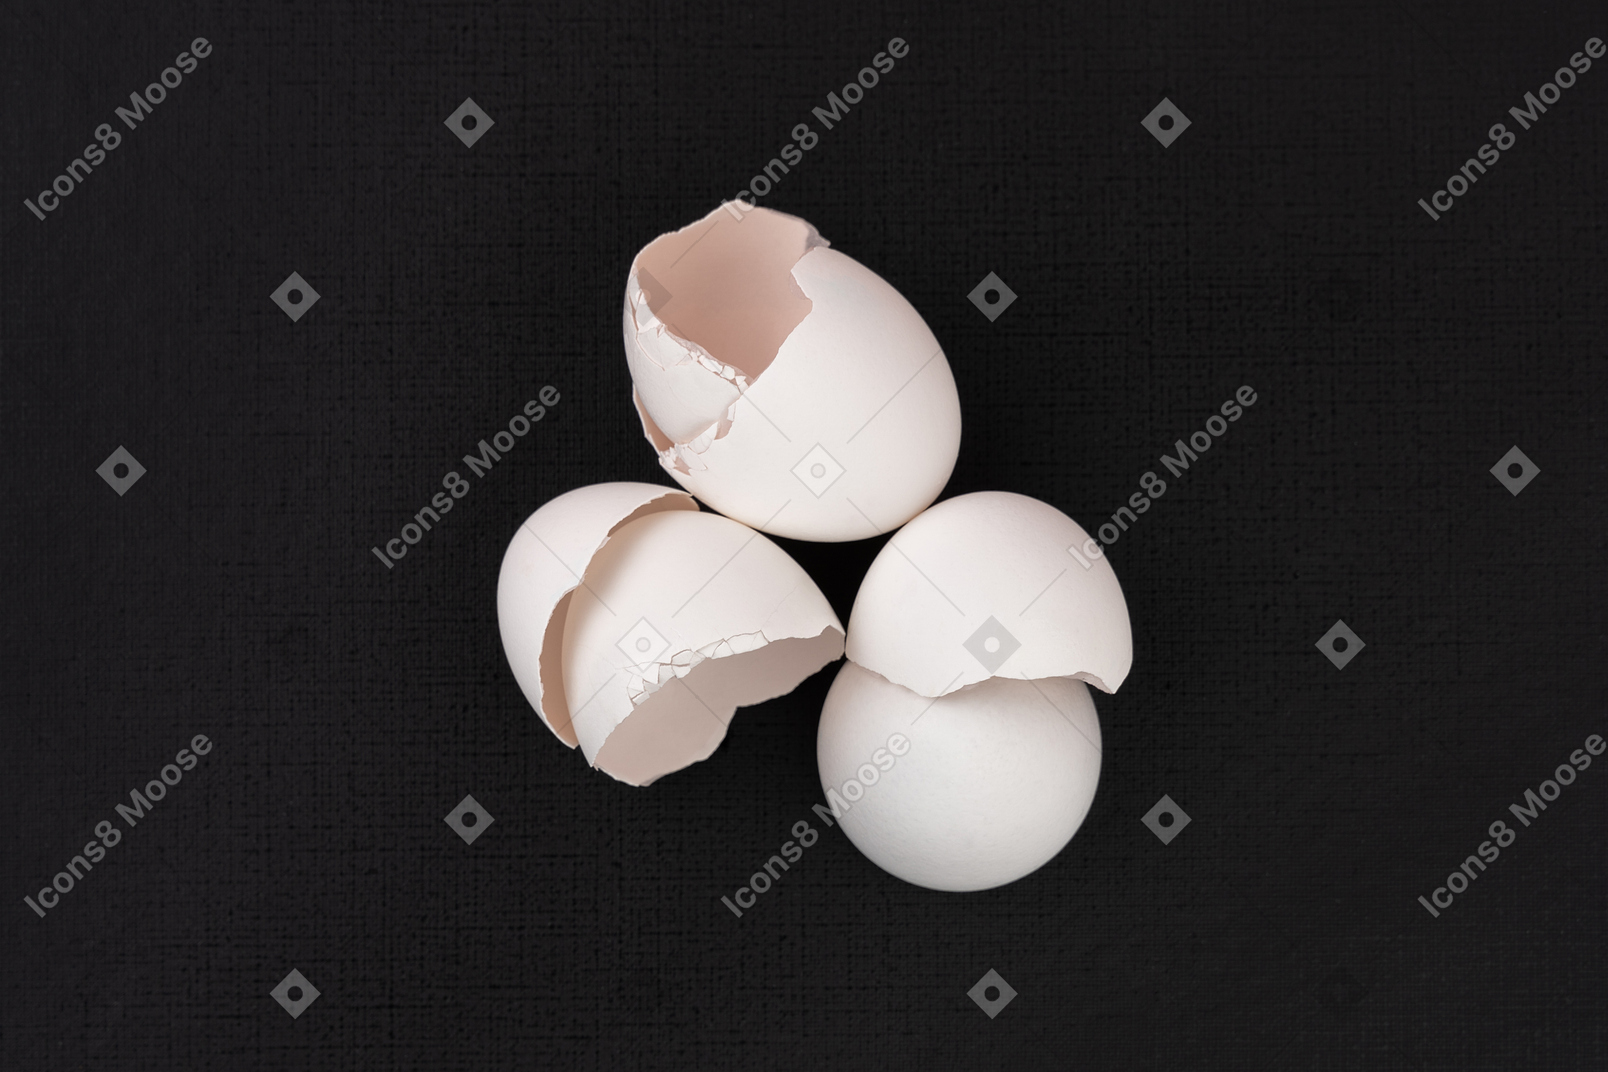 Eggshells in the dark